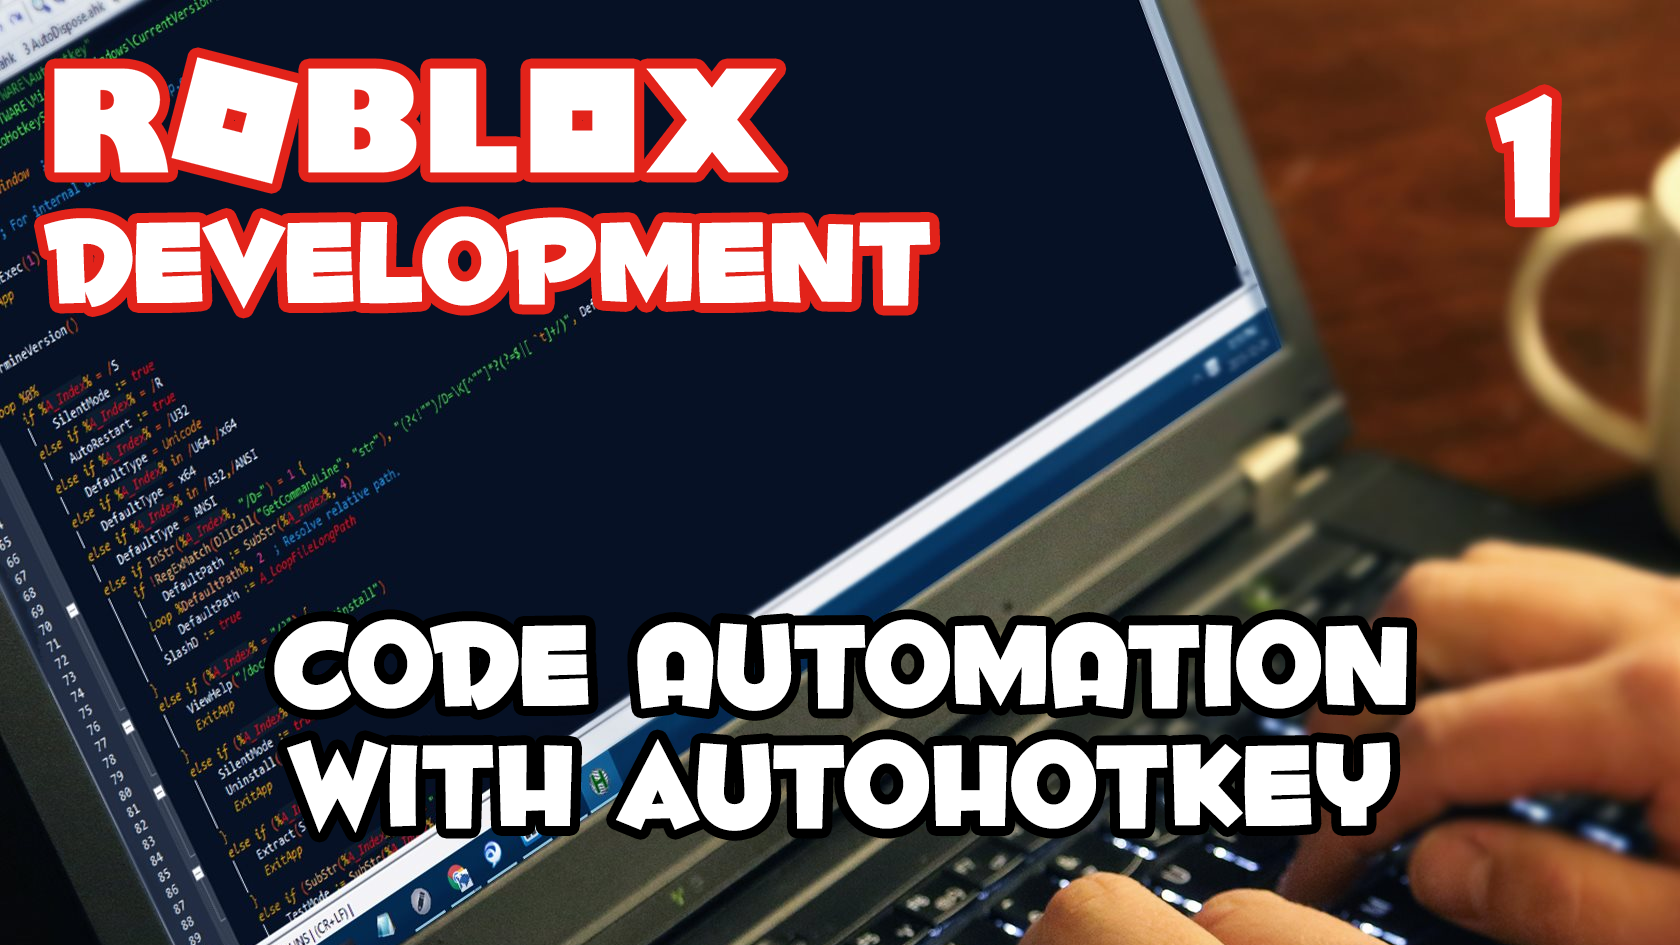 Roblox Code Automation With Lua Code Templates In Roblox Studio With Autohotkey Roblox Development 01 Cria Jogo - roblox hotkey script